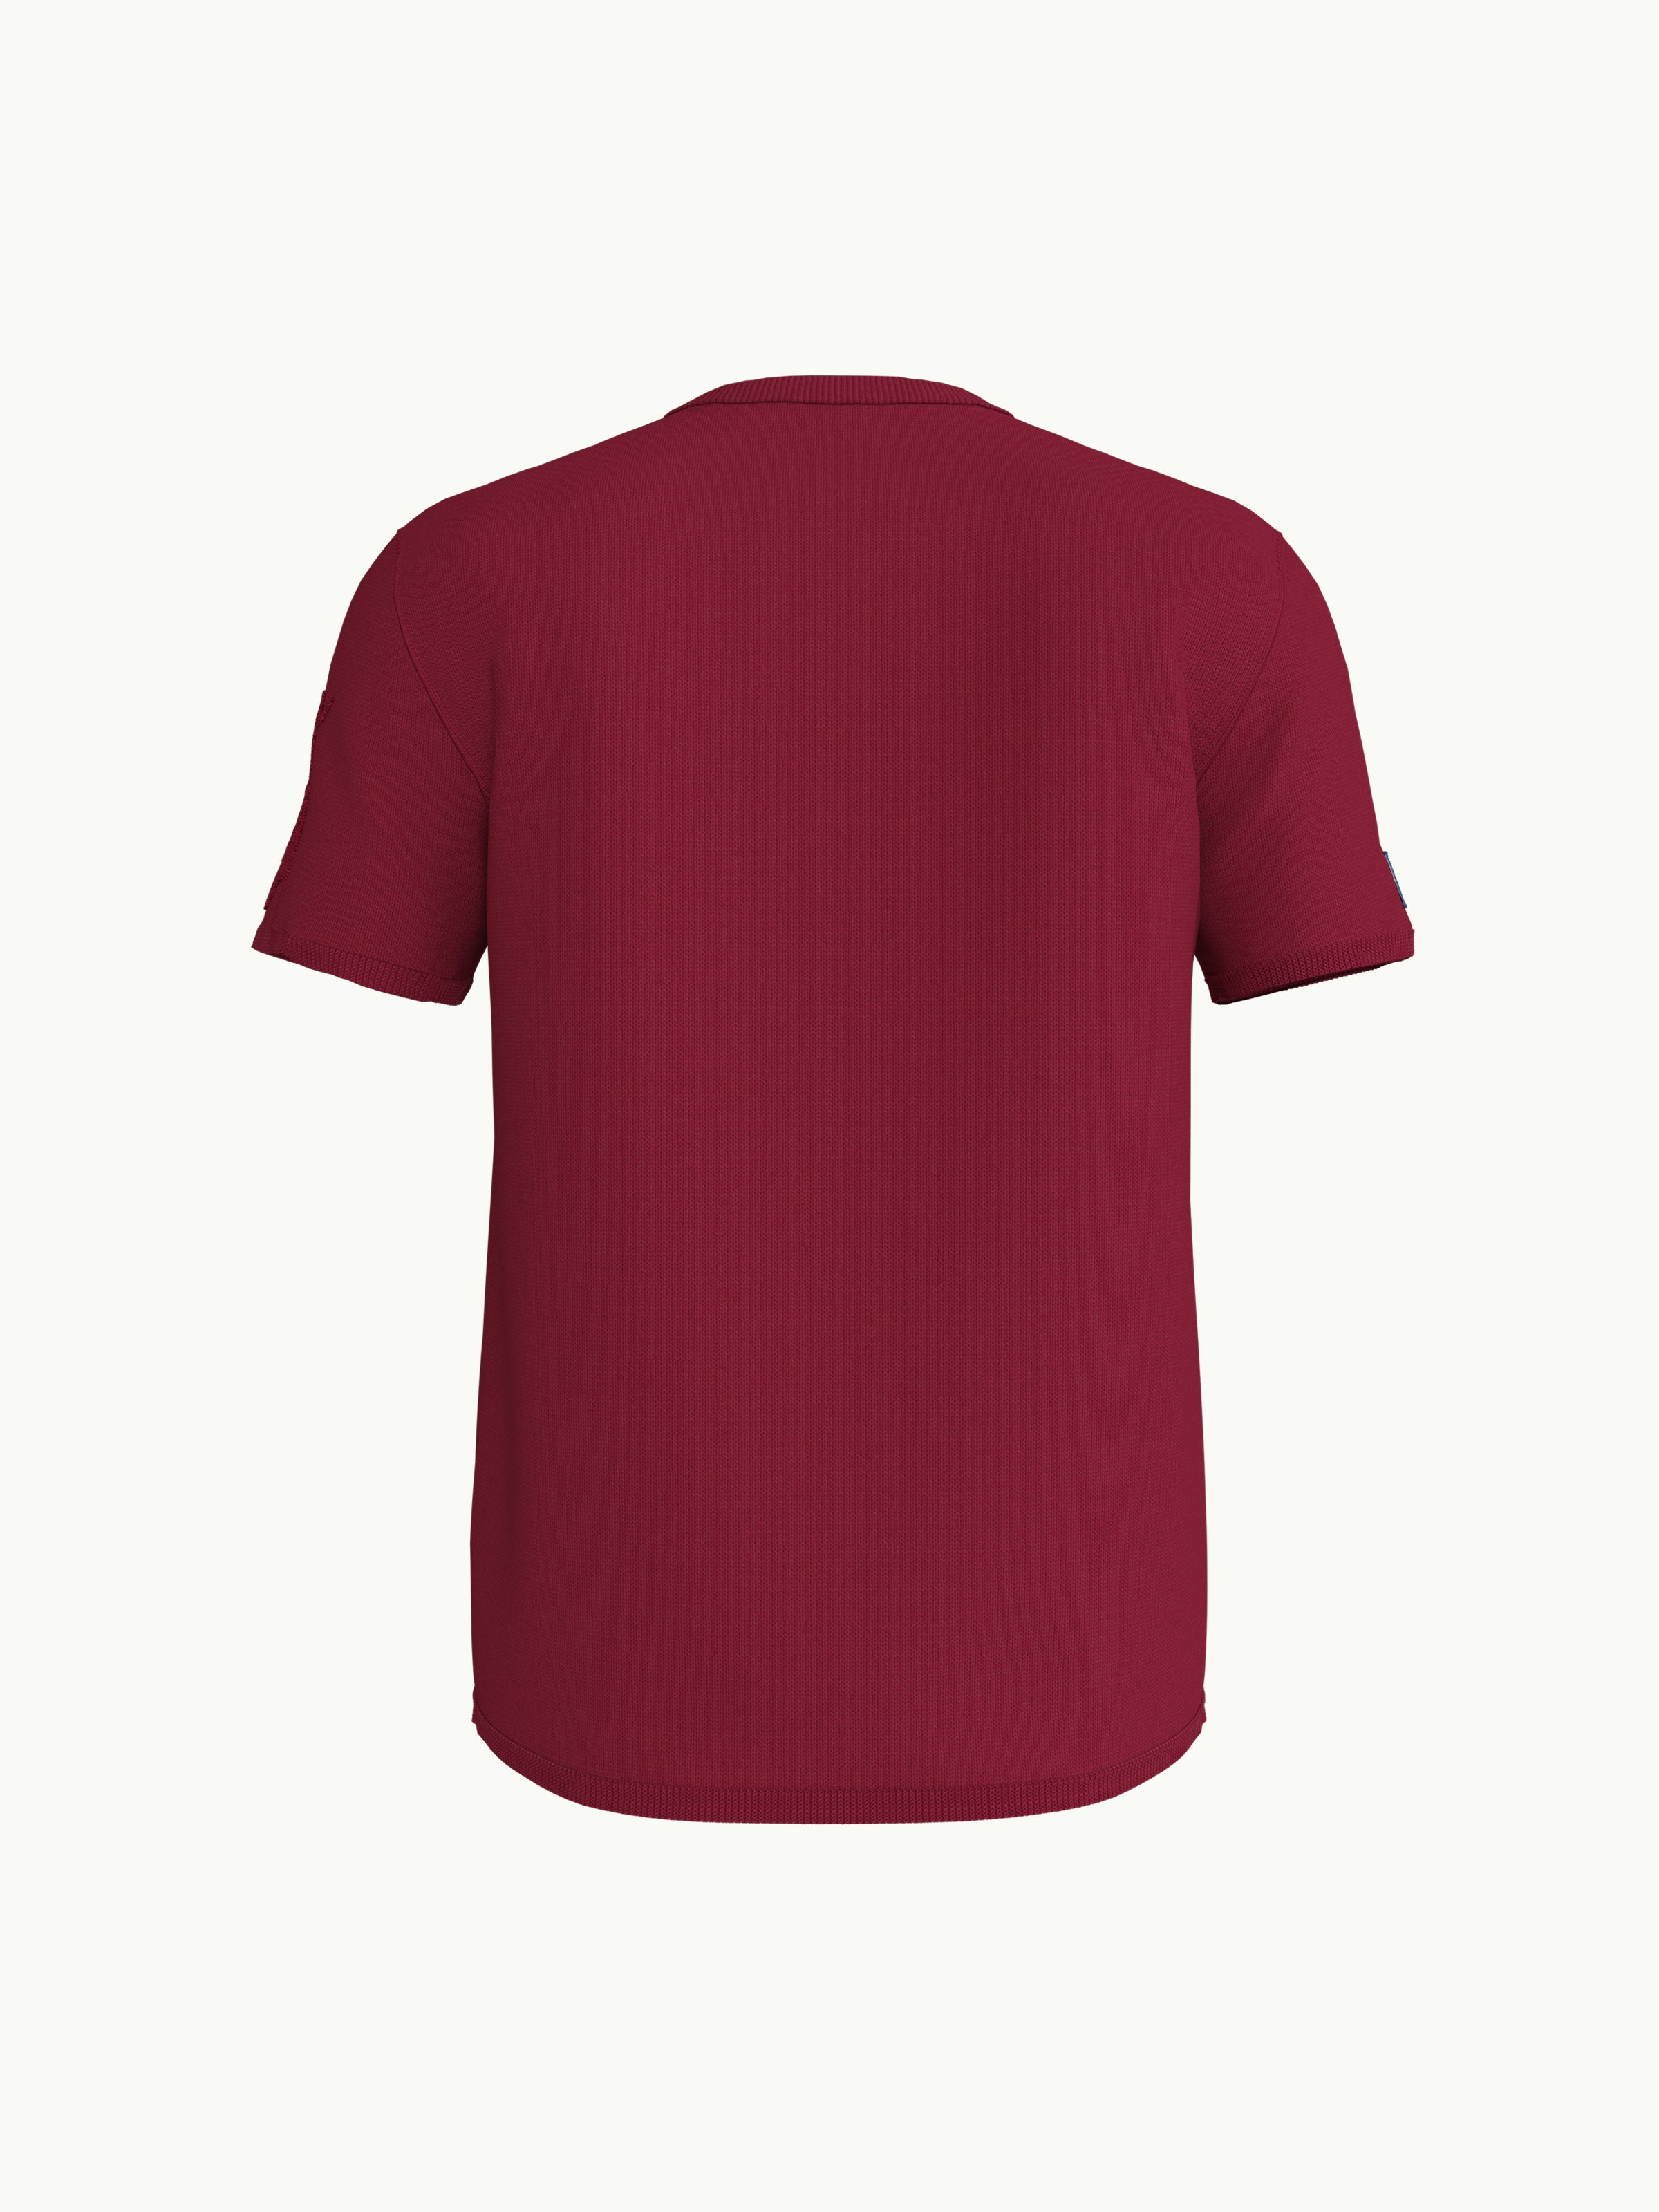 Men's T-Shirt - Mountain Frog Crimson